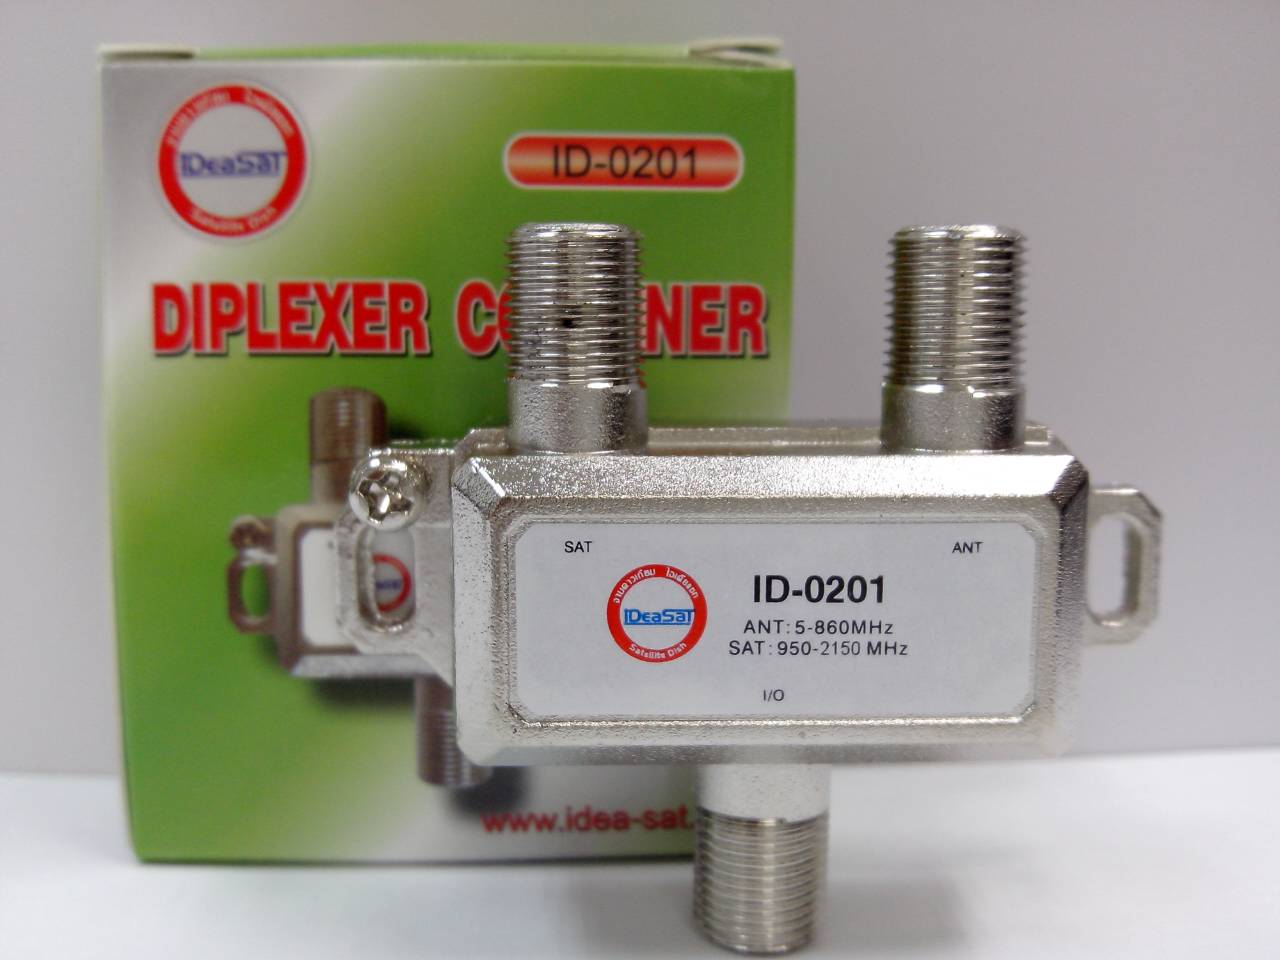 ideasat Diplexer Combiner ID-0201 ตัวรวม-แยกสัญญาณ